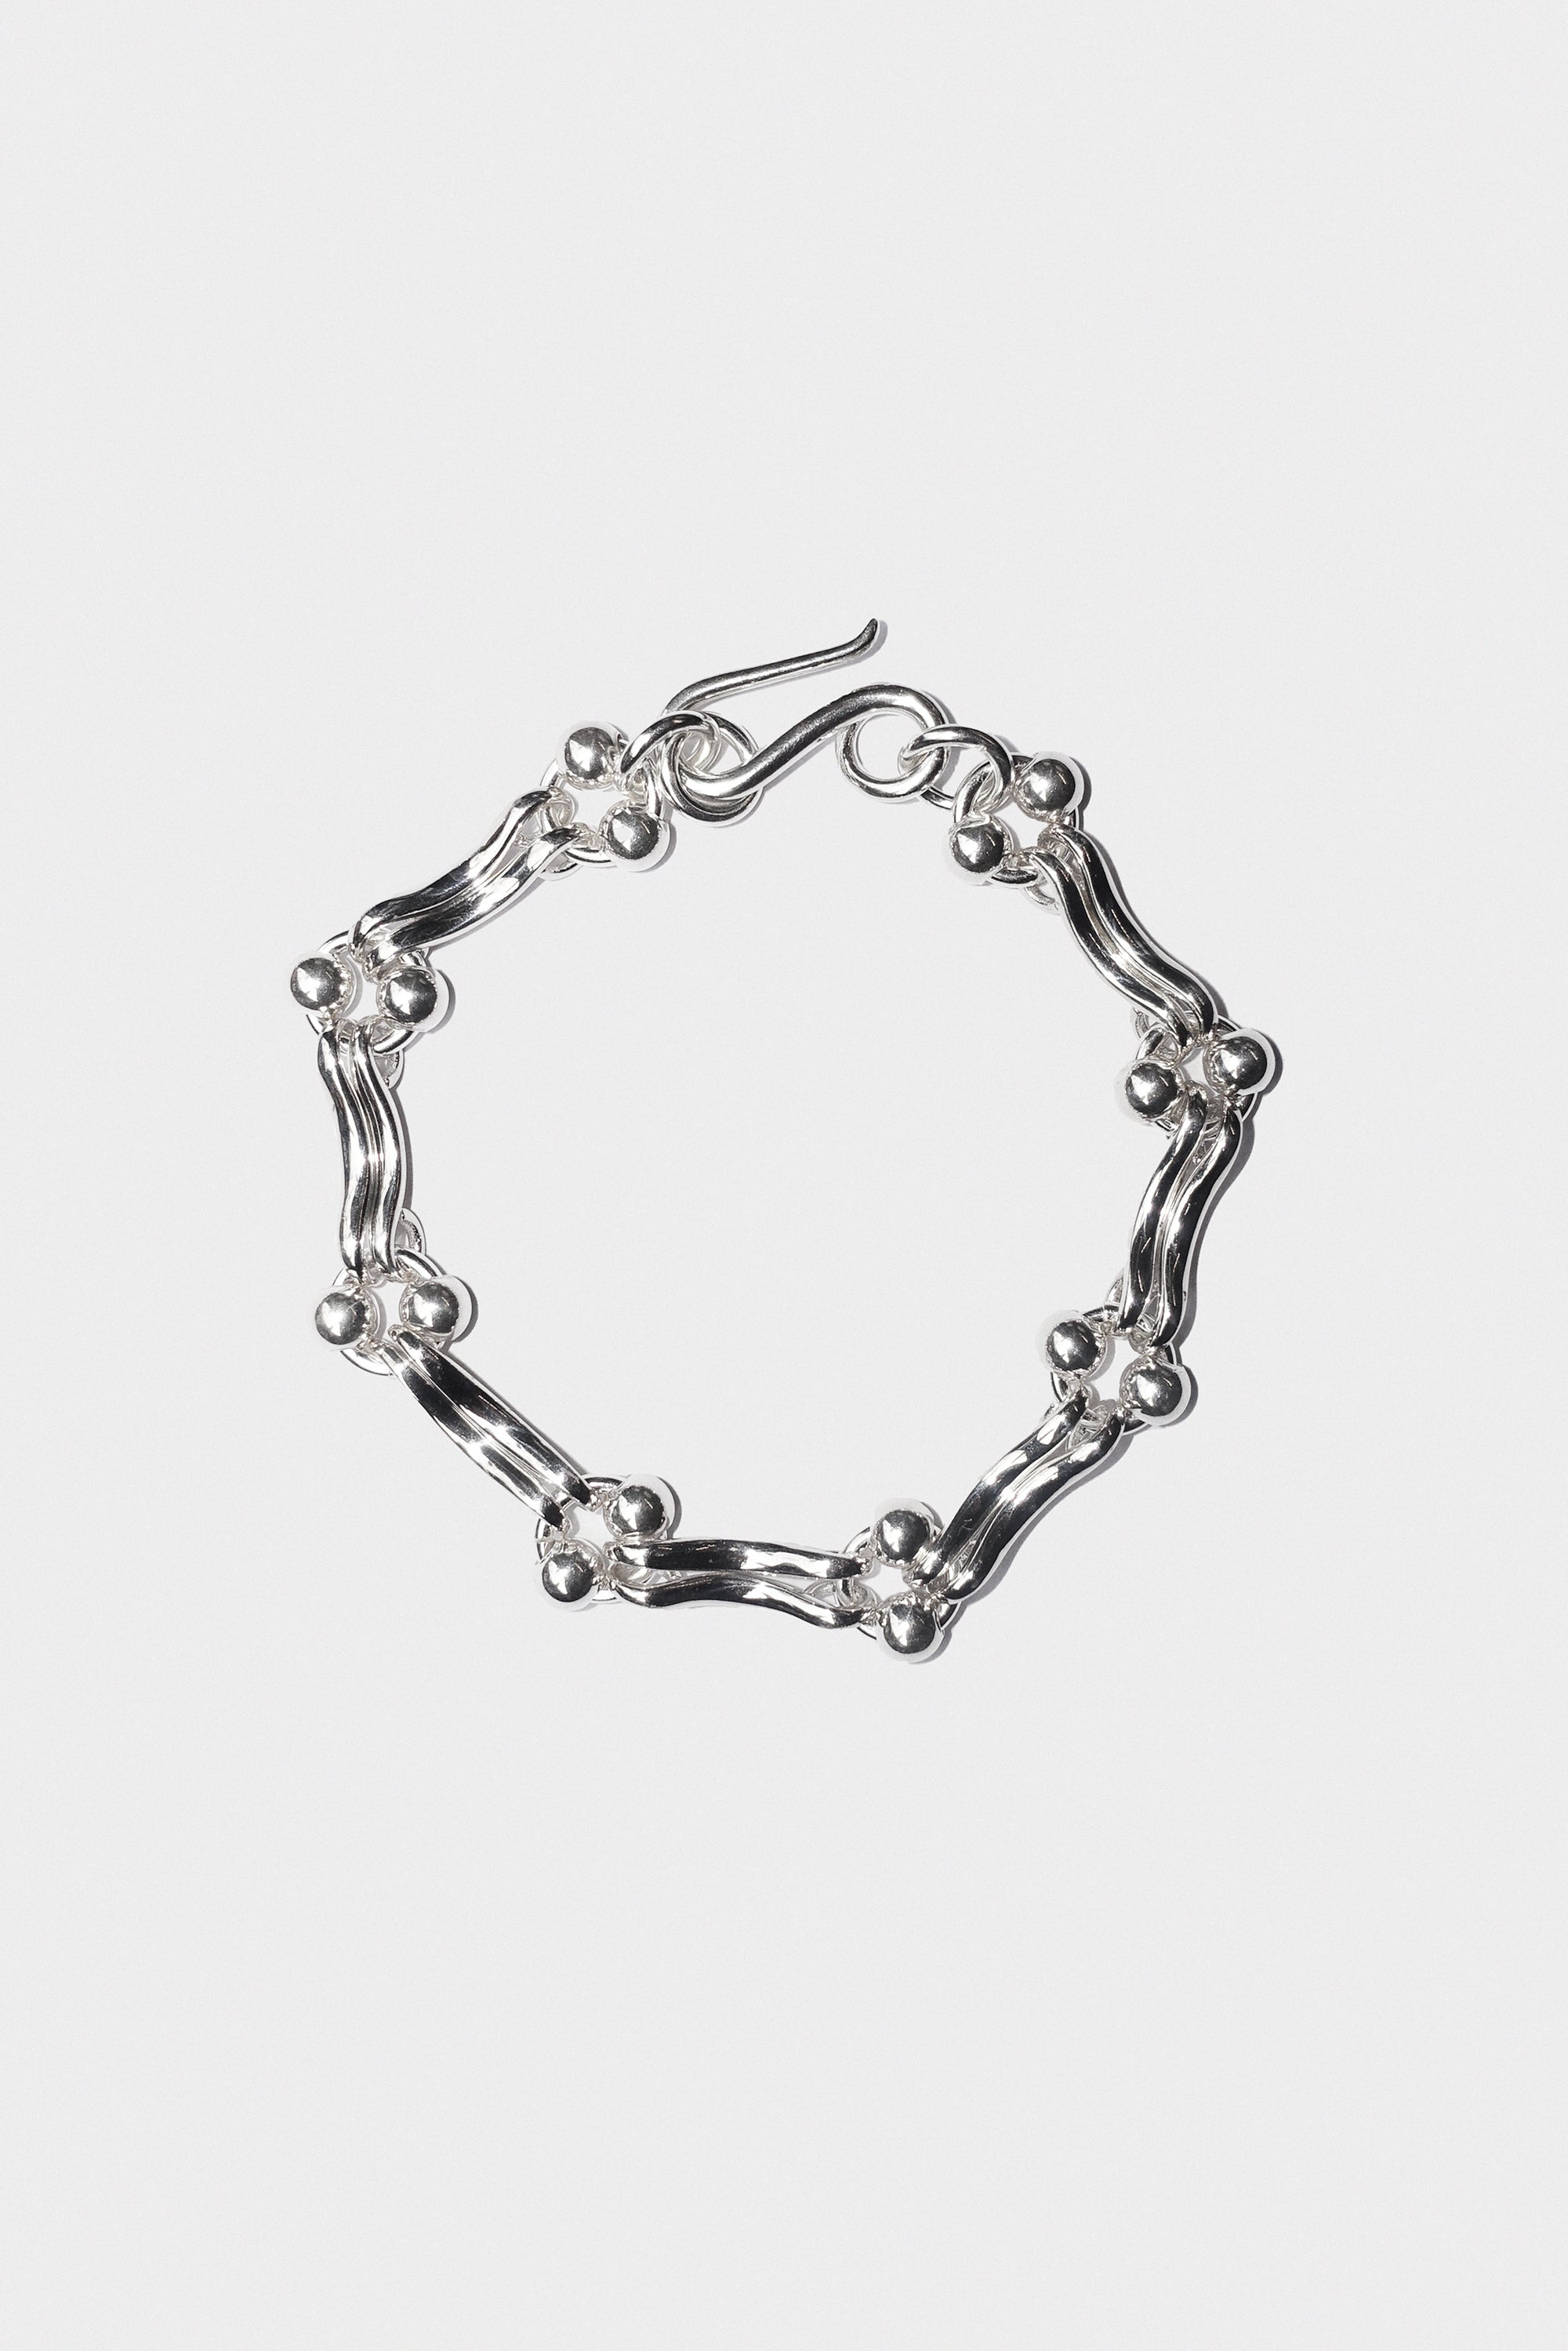 Union Bracelet in Sterling Silver by Sapir Bachar